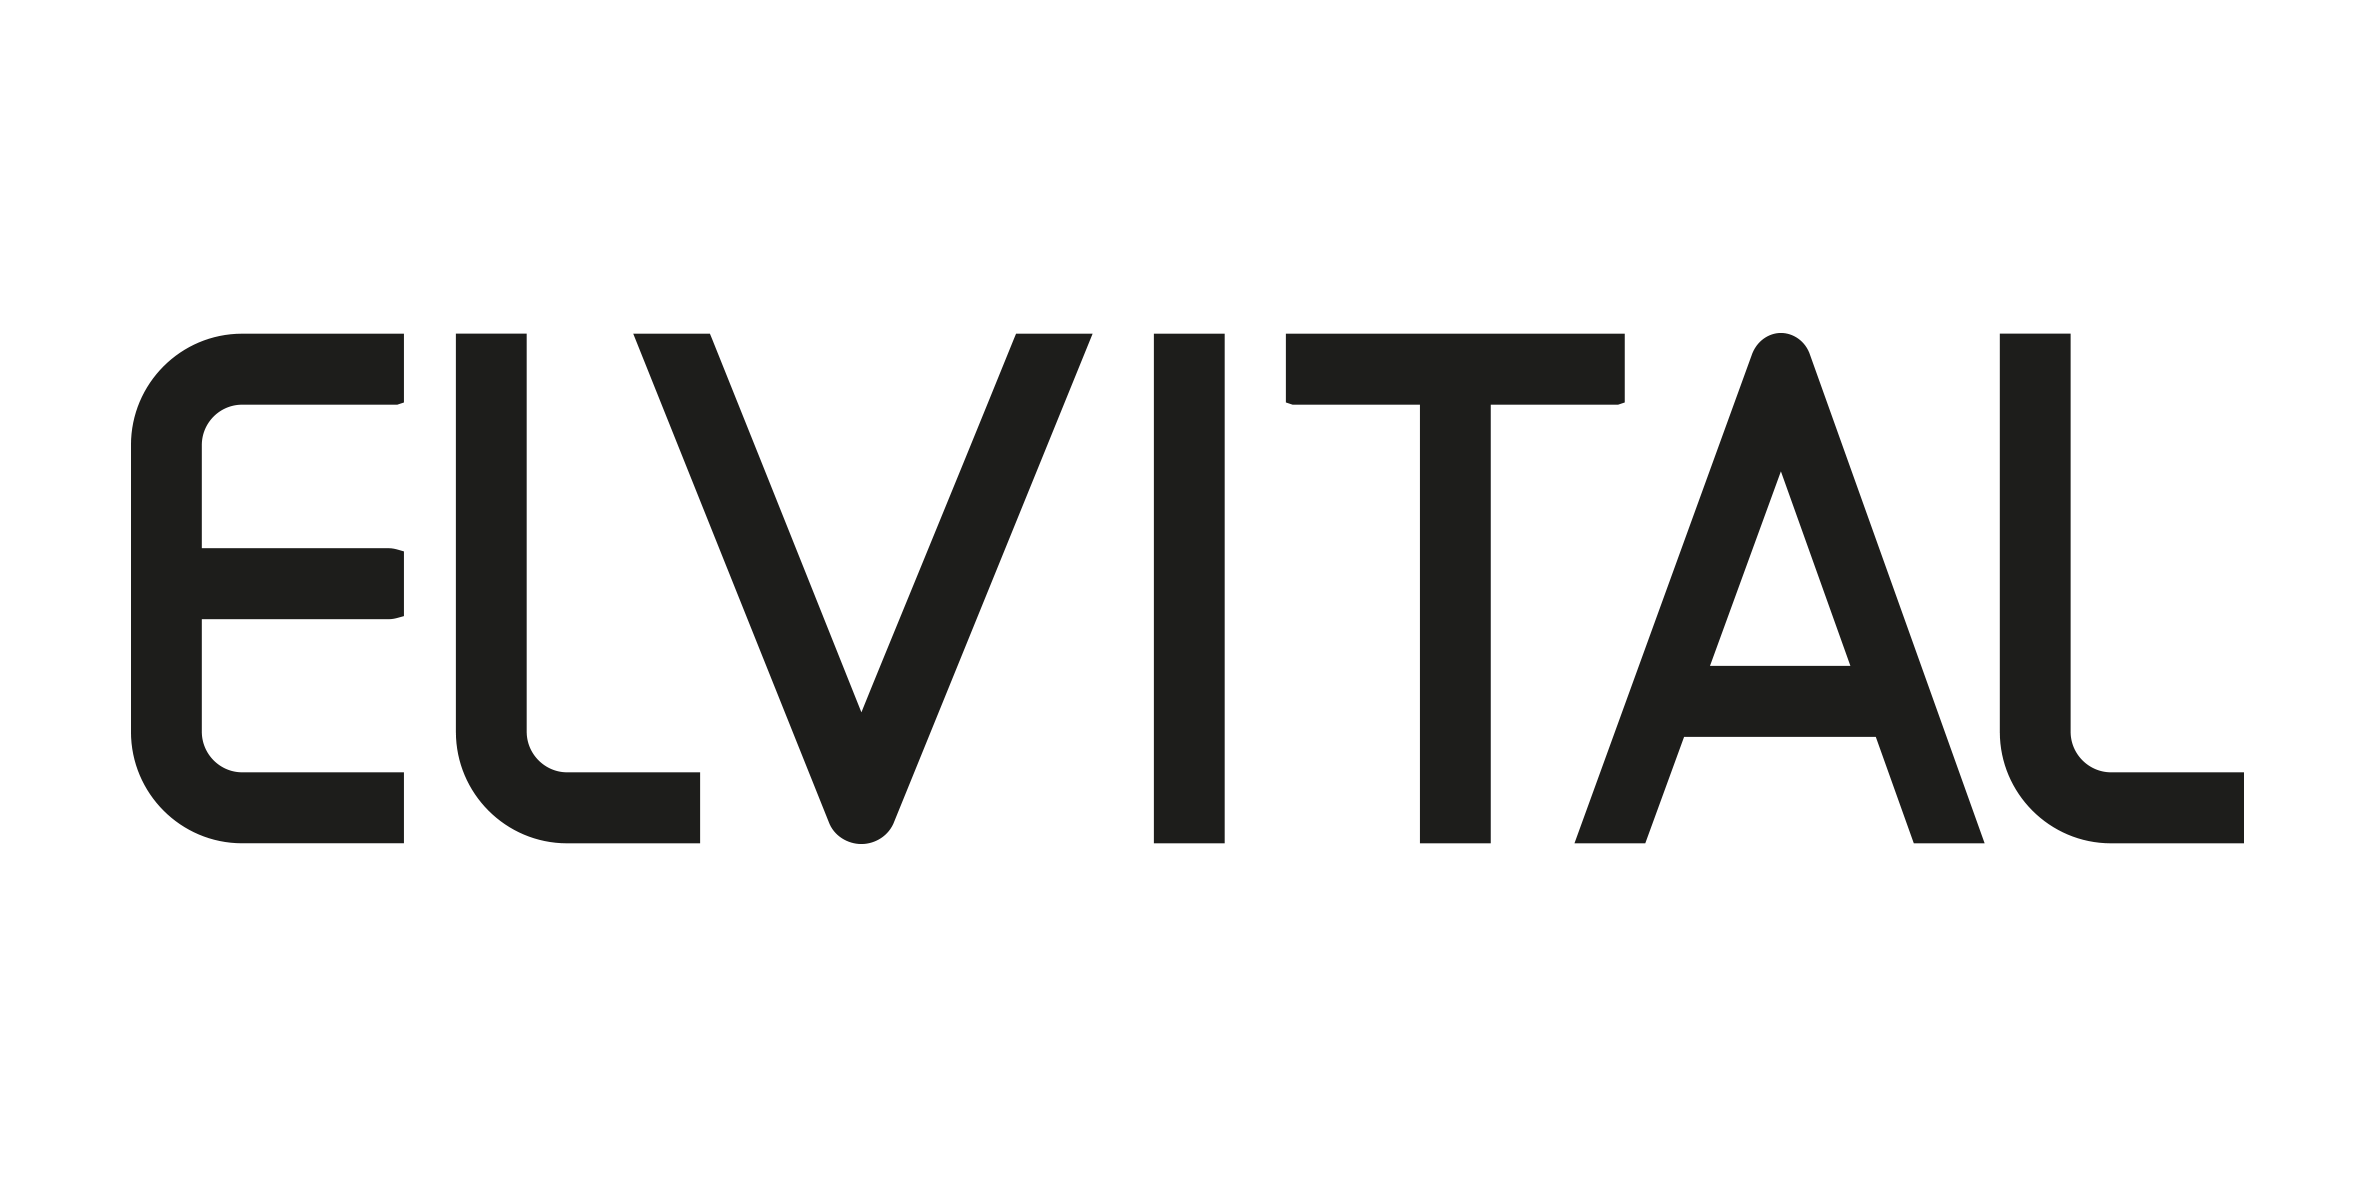 Elvital logo